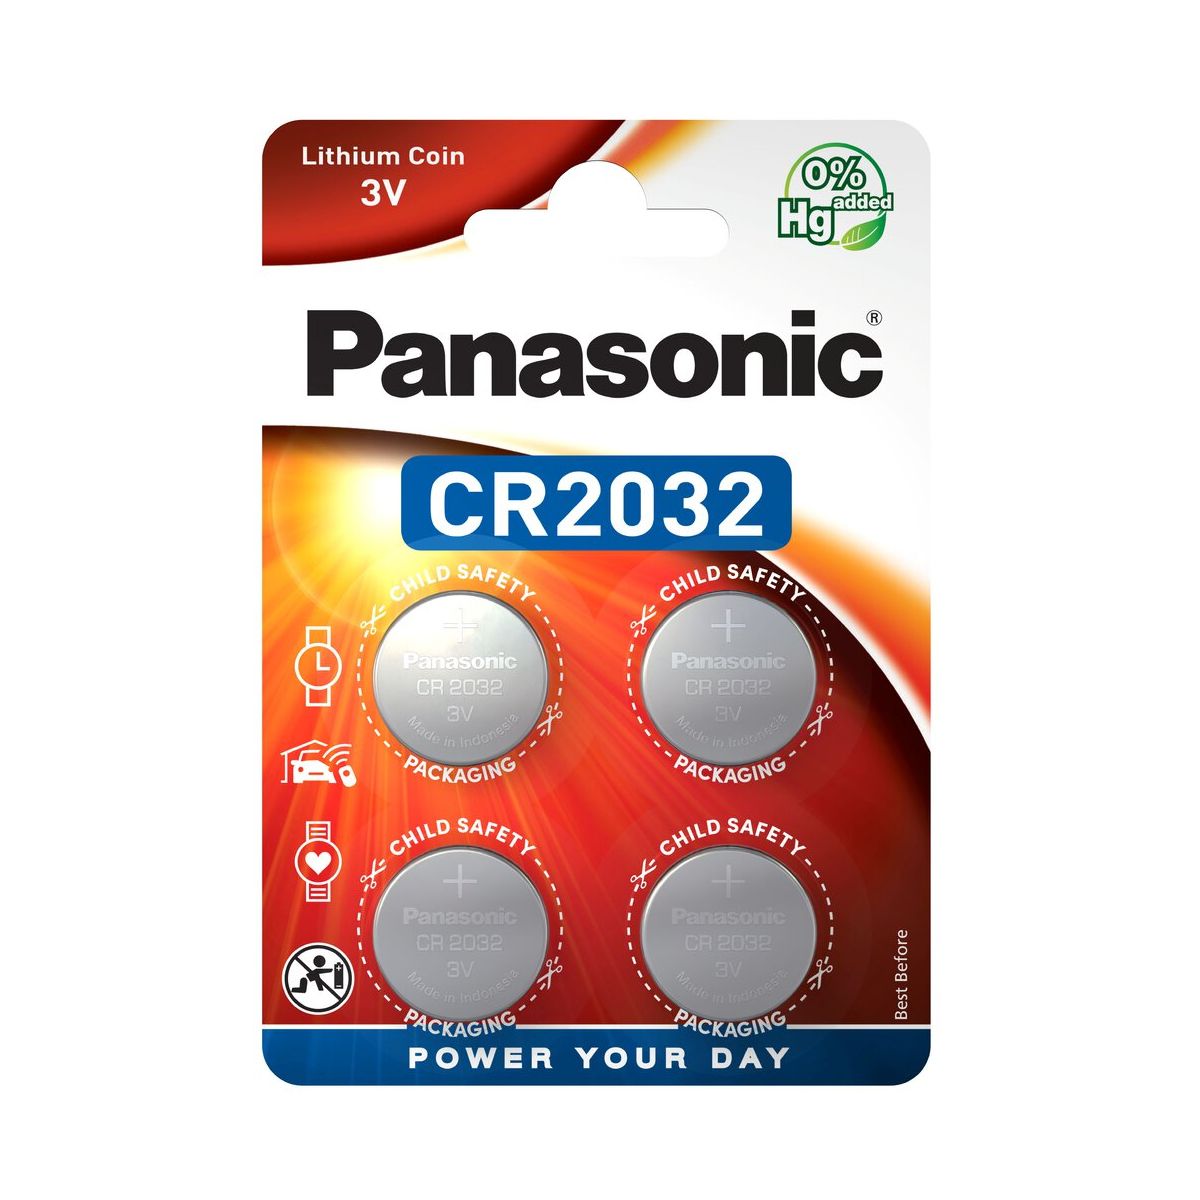 Baterie Panasonic 2032 CR2032